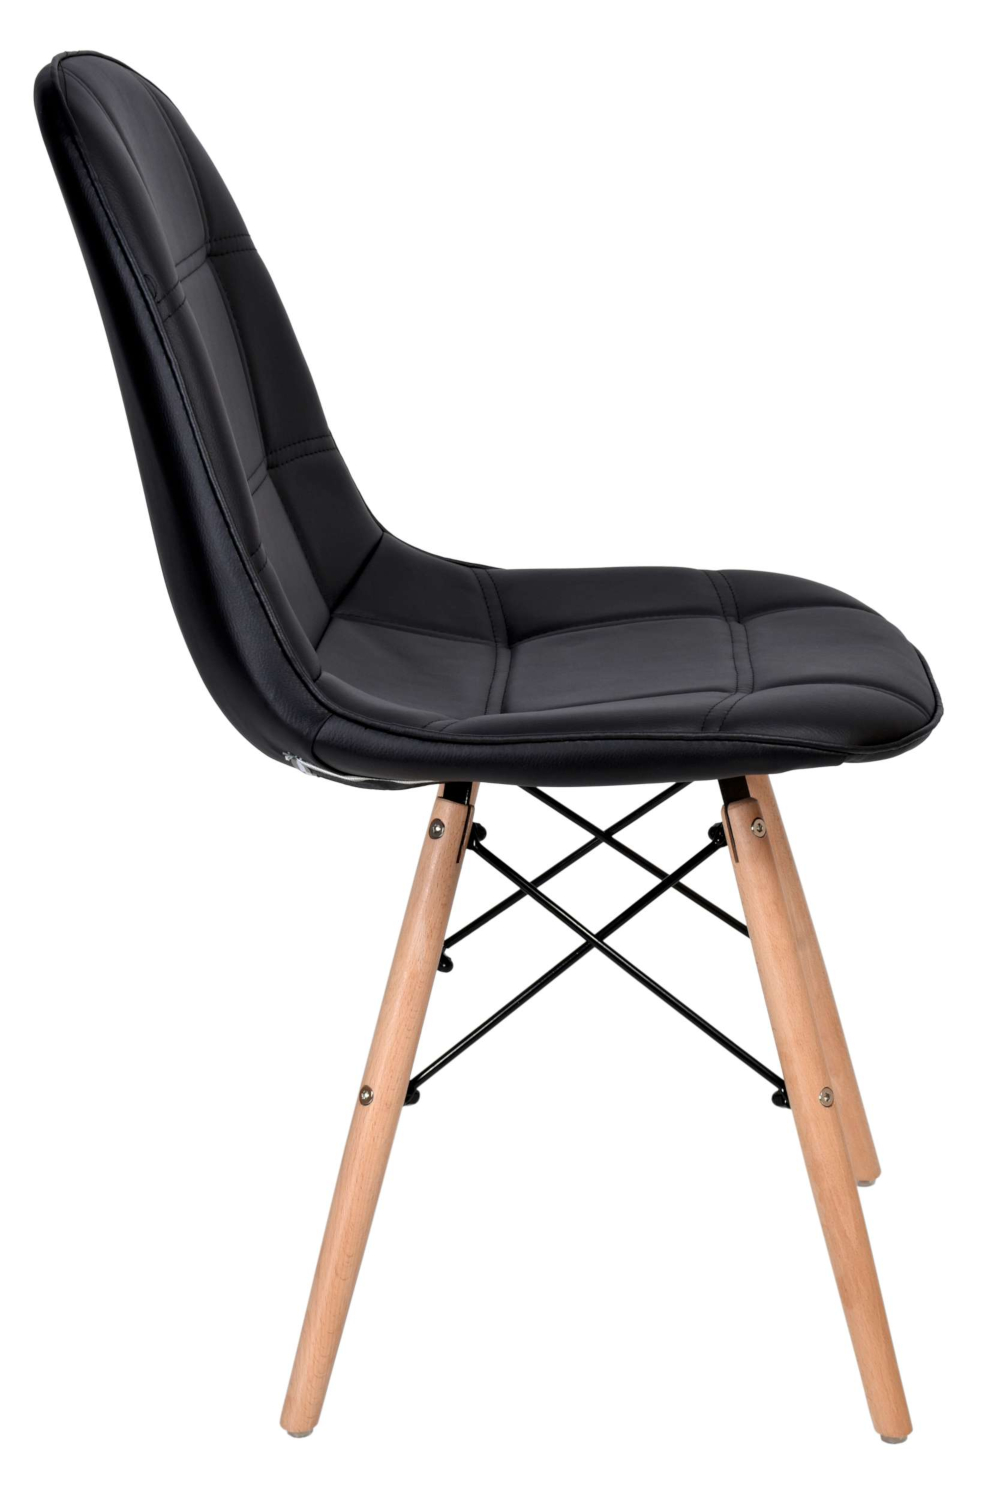 krzeslo tapicerowane lyon